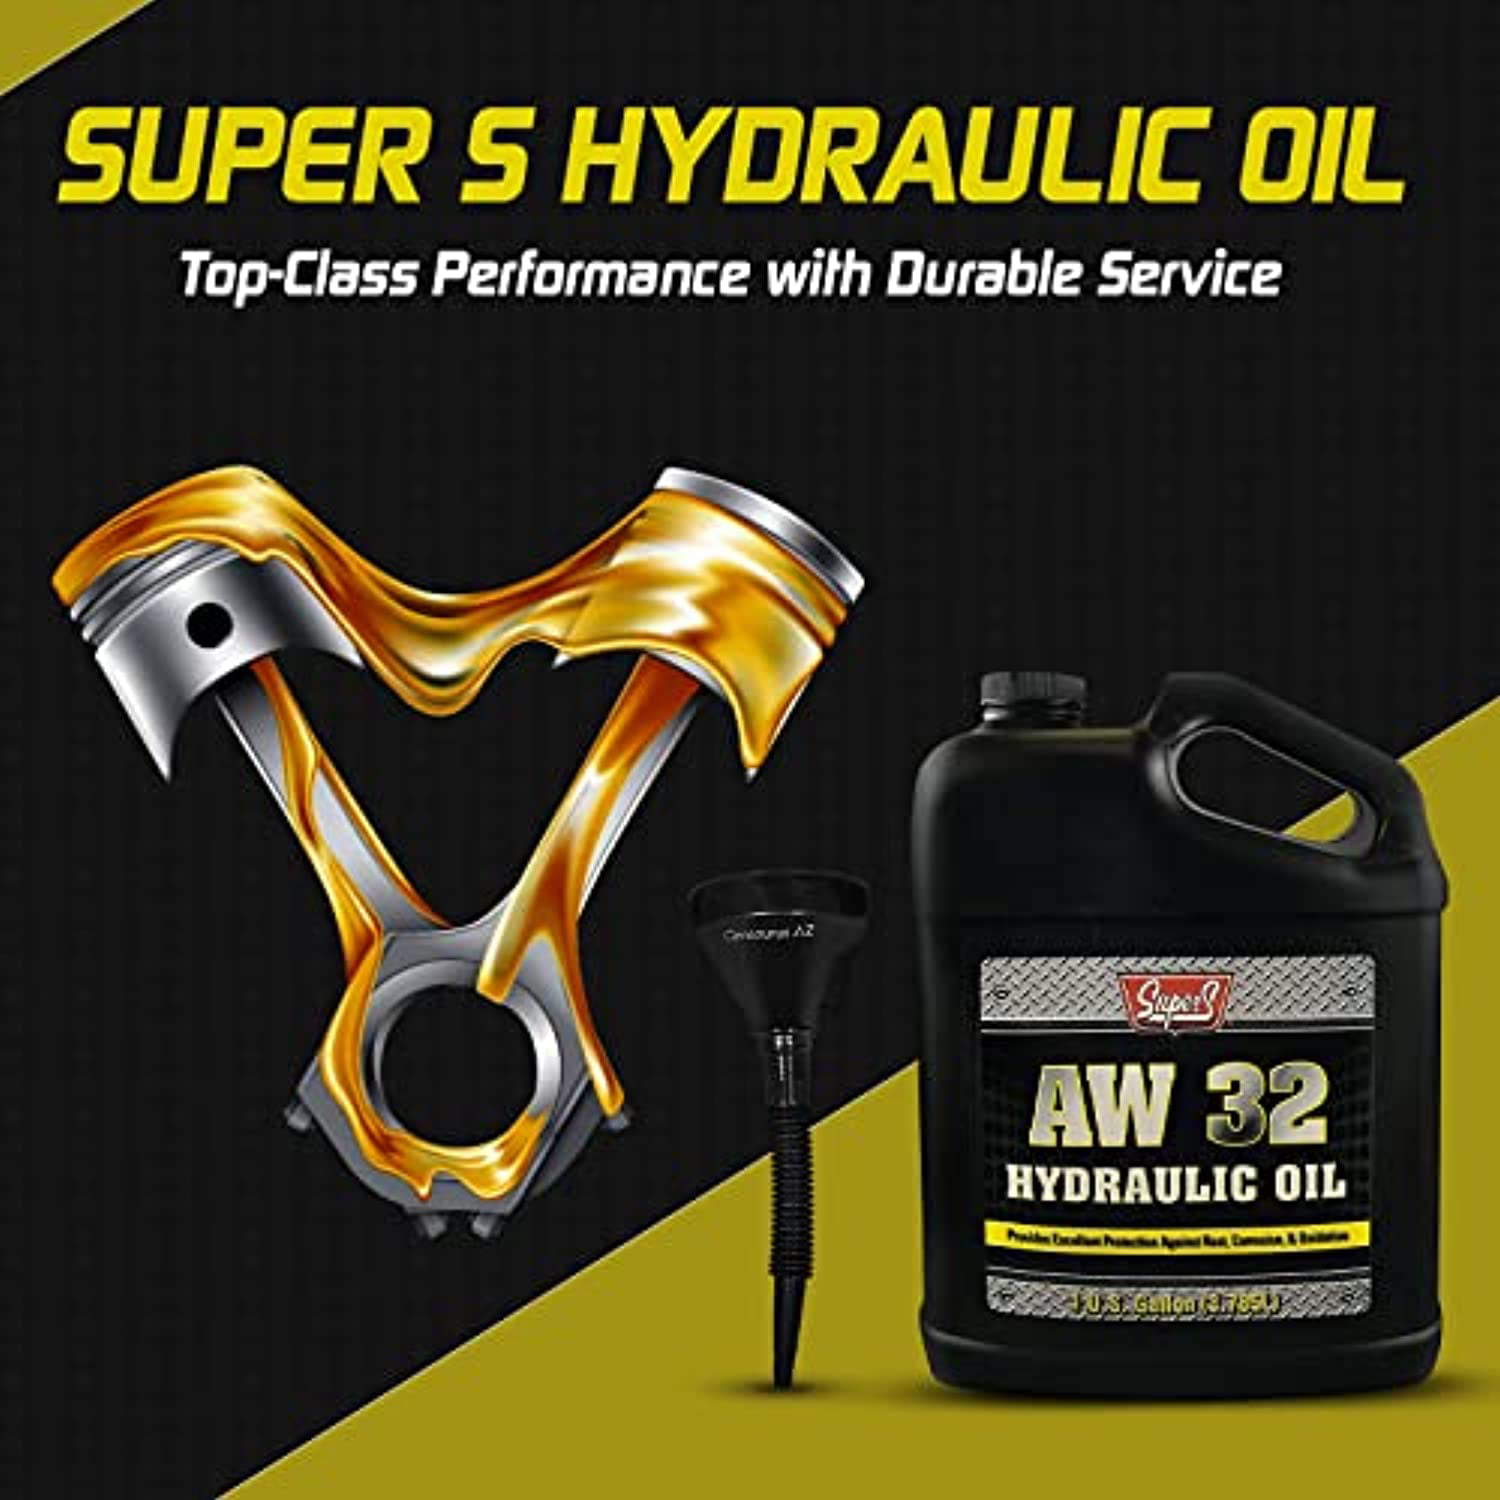 Super S, Aw68 hydraulic oil SUS40